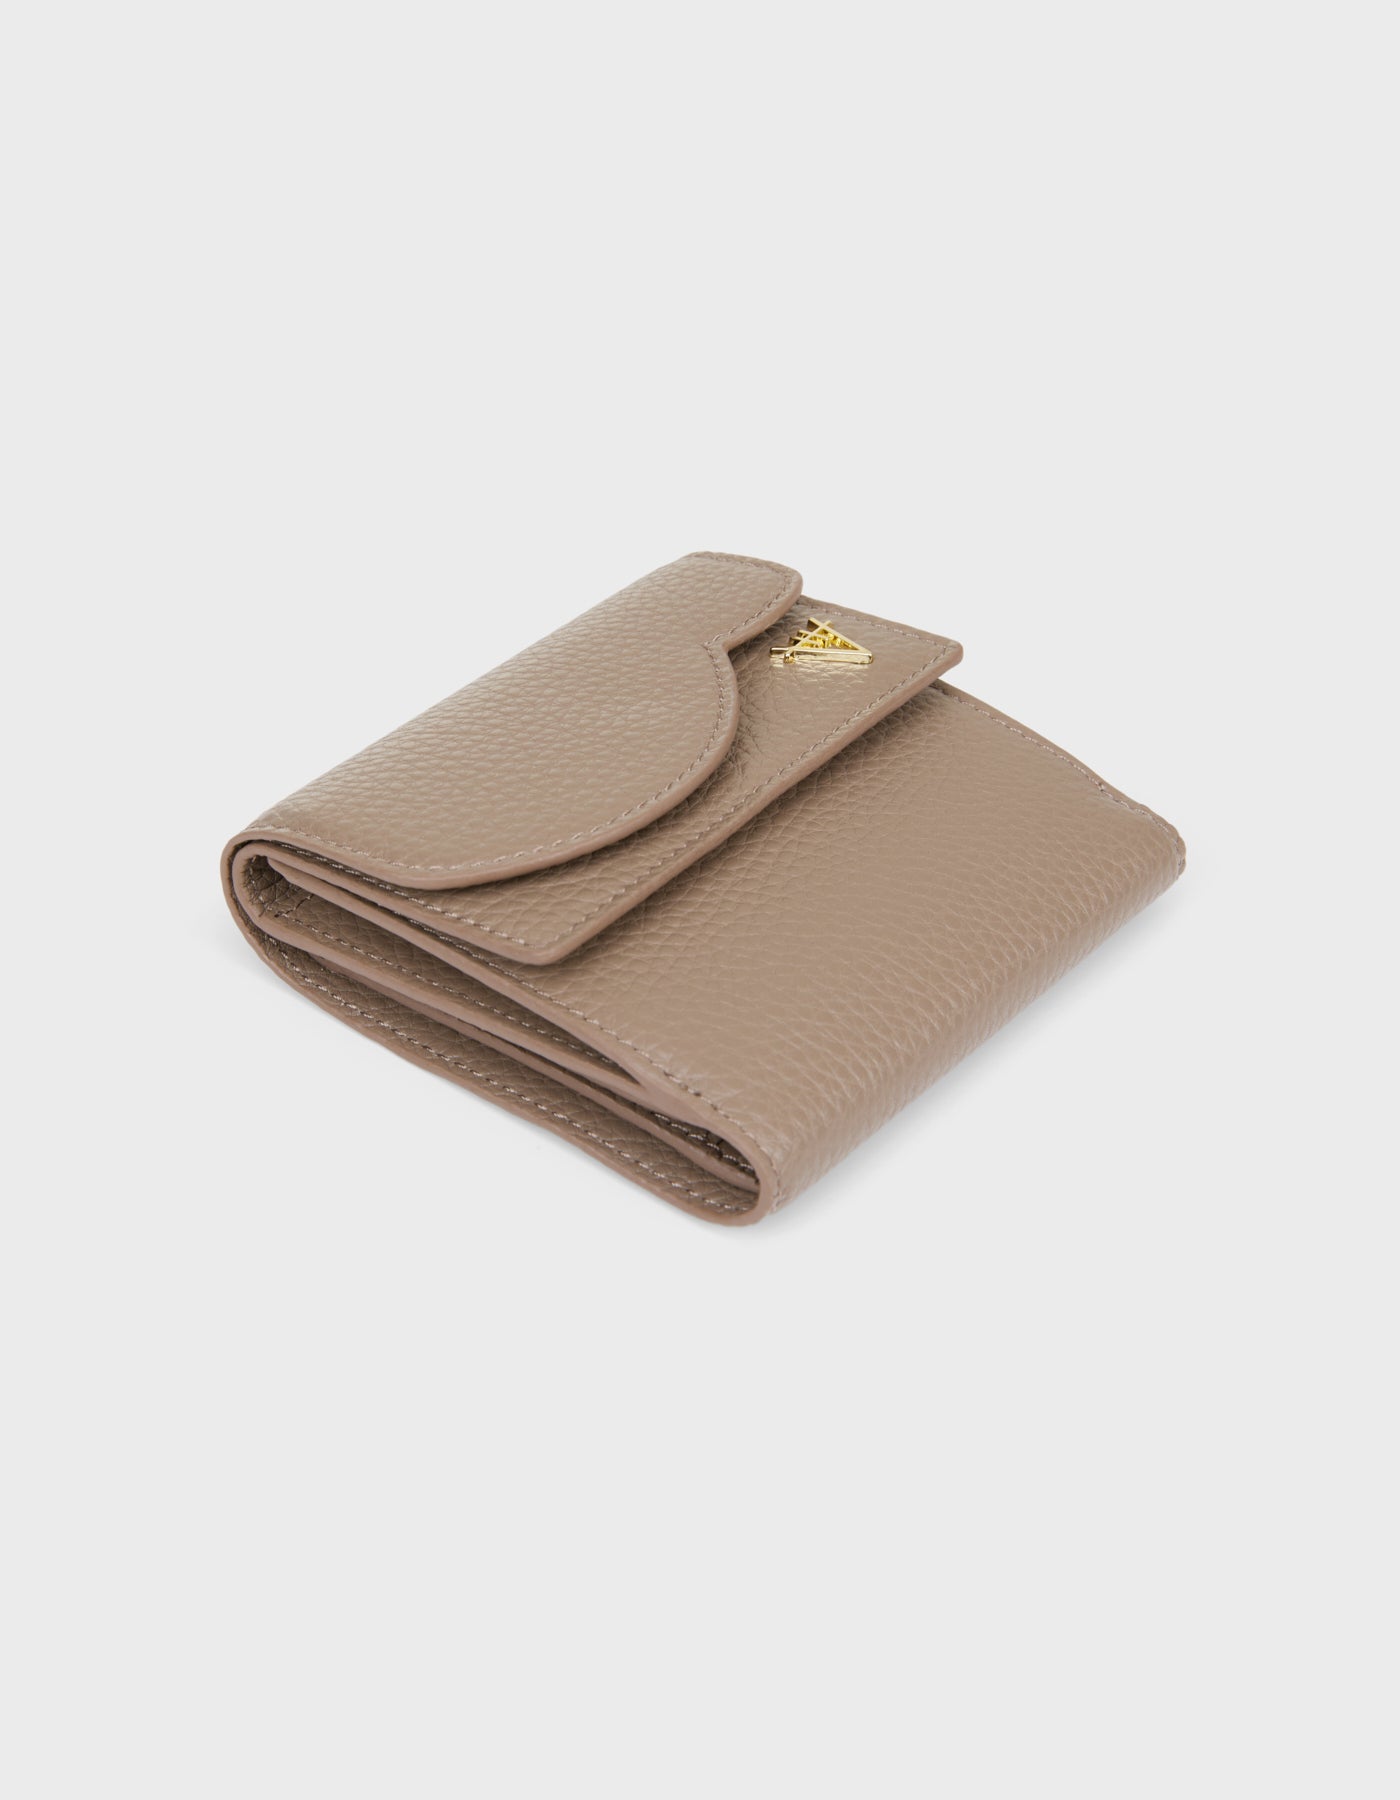 HiVa Atelier - Larus Compact Wallet Mink